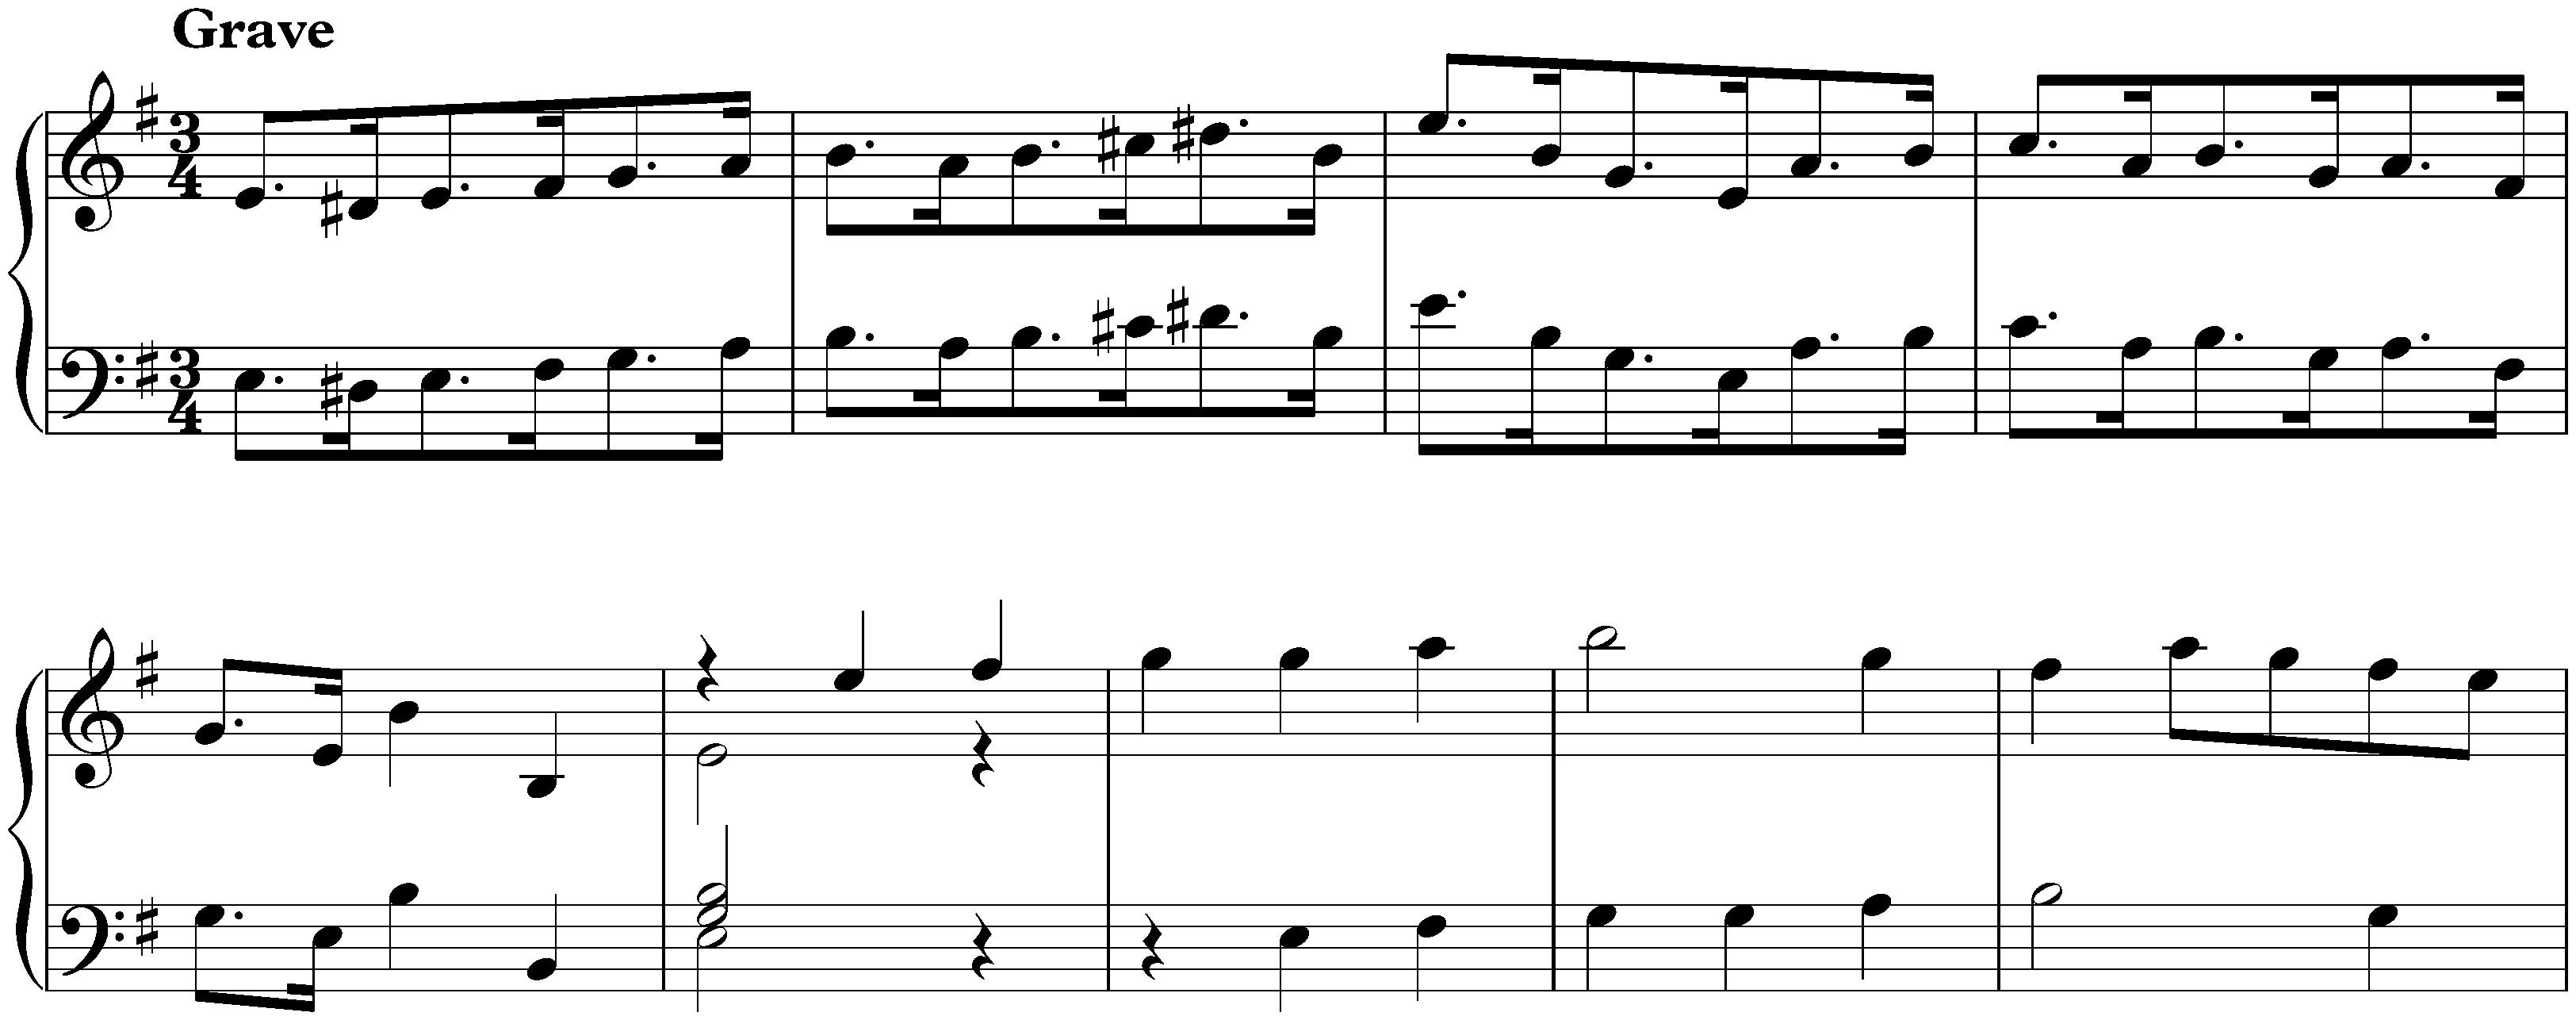 Concerto in G major after Johann Ernst of Saxe-Weimar, BWV 592; 2. Grave